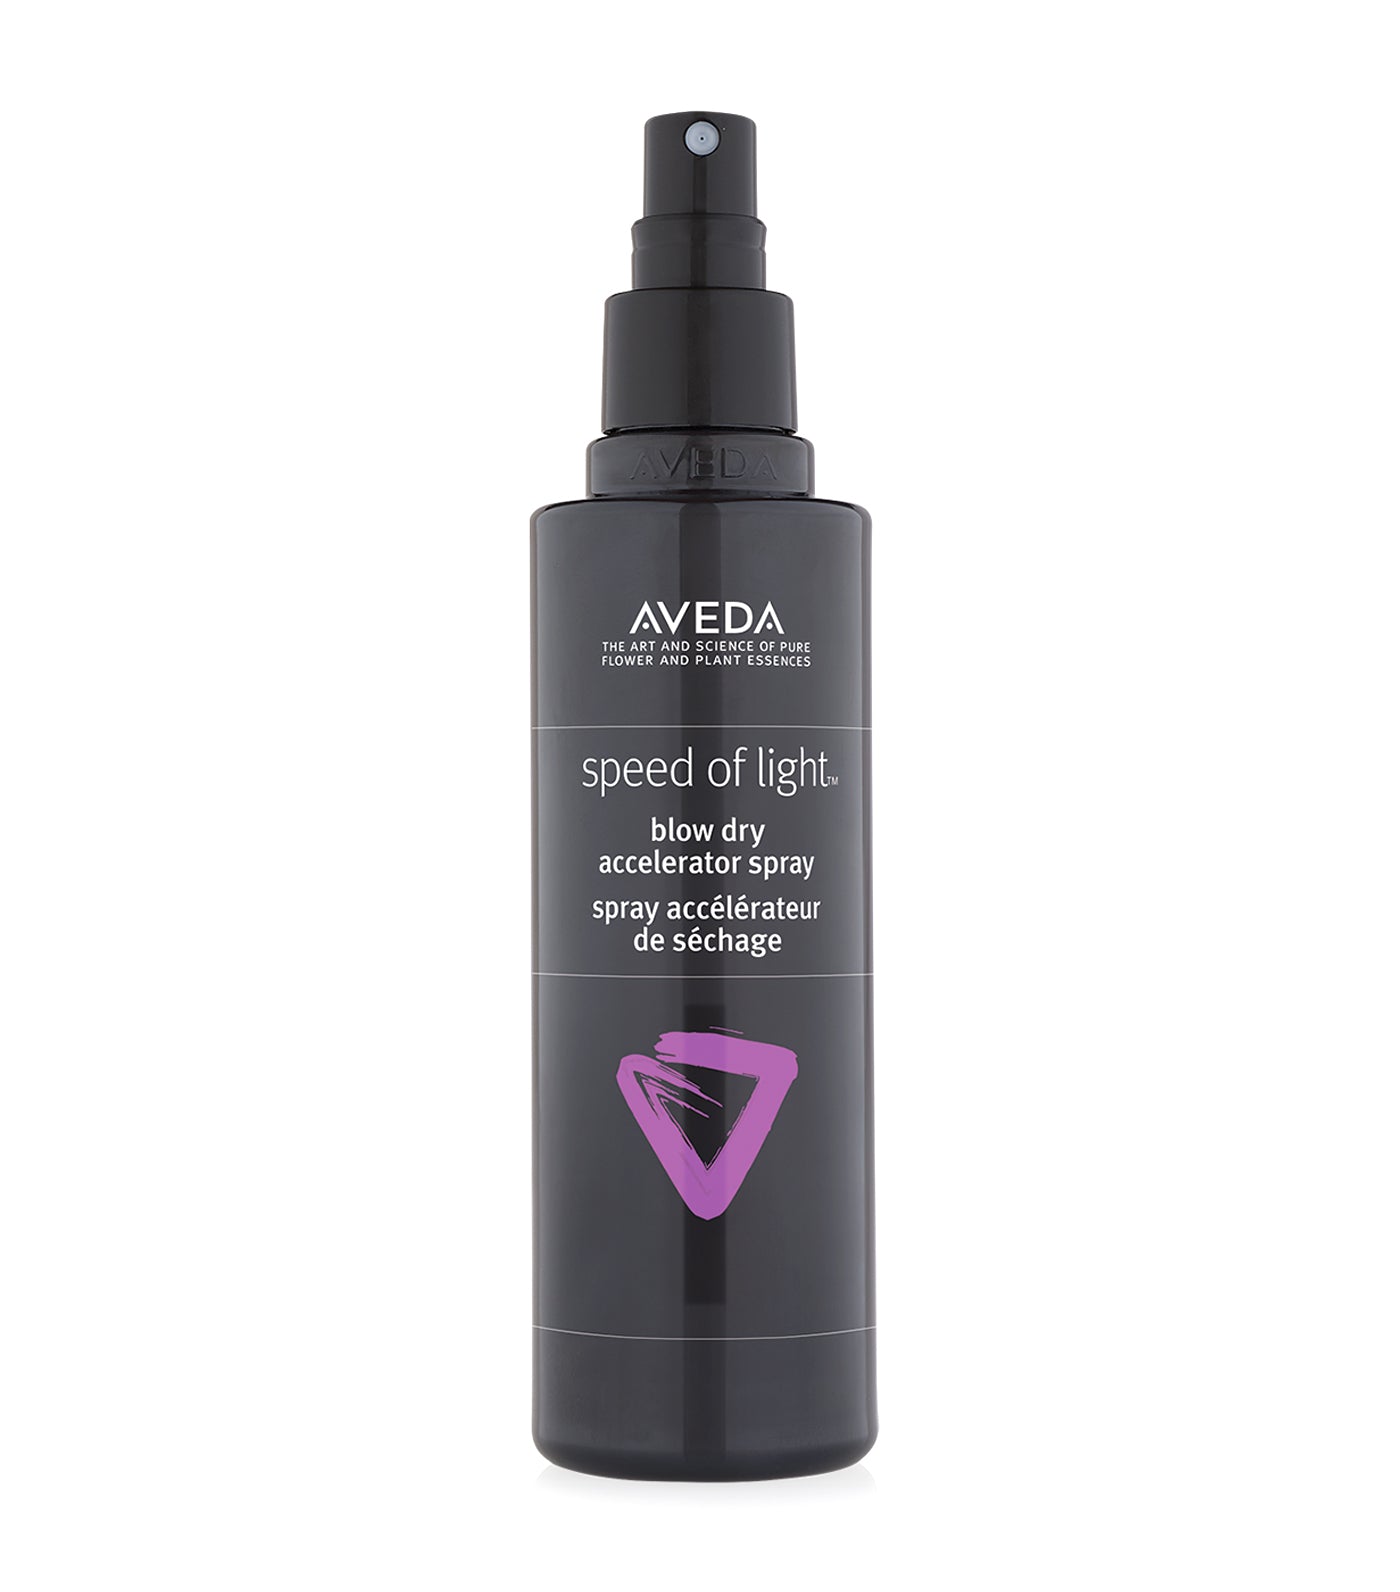 Aveda speed of light Blow Dry Accelerator Spray